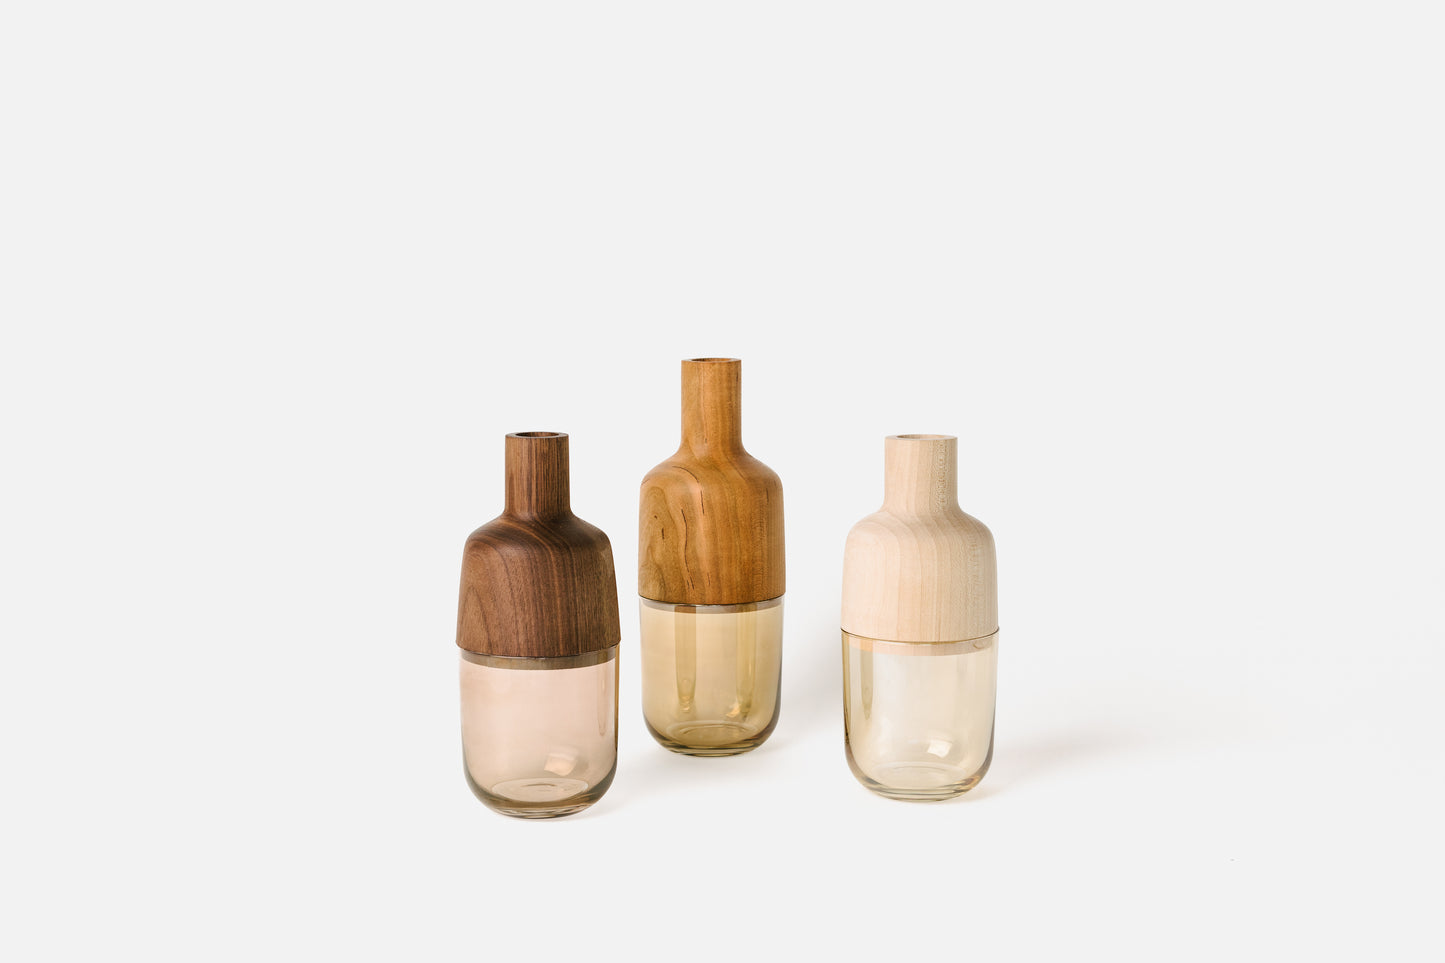 Hardwood and glass Marais Vases. Left to right: Indira, Maya, Greta | Melanie Abrantes Designs